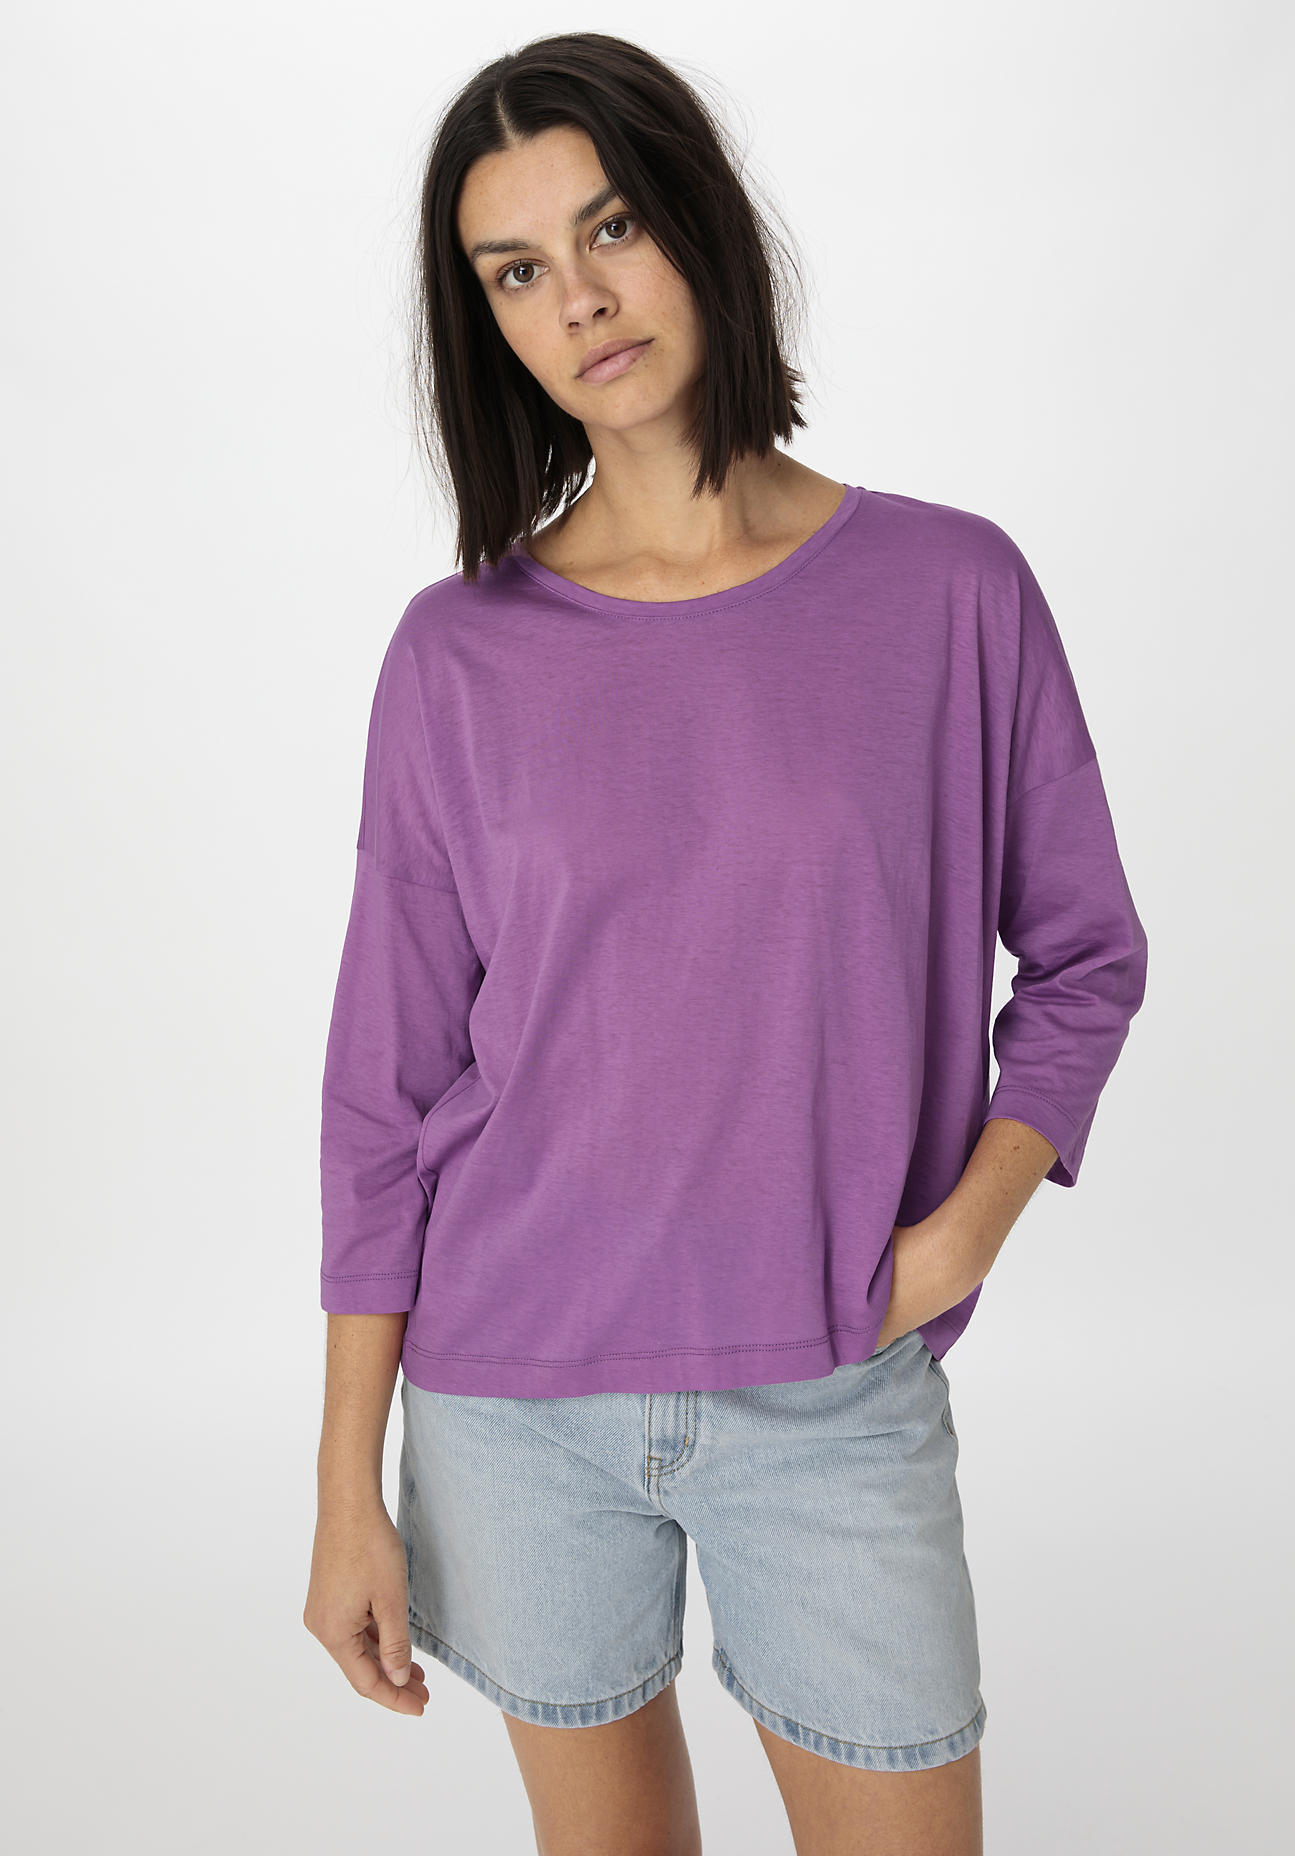 hessnatur Damen Premium Light Shirt Oversized aus Bio-Baumwolle - lila - Größe M